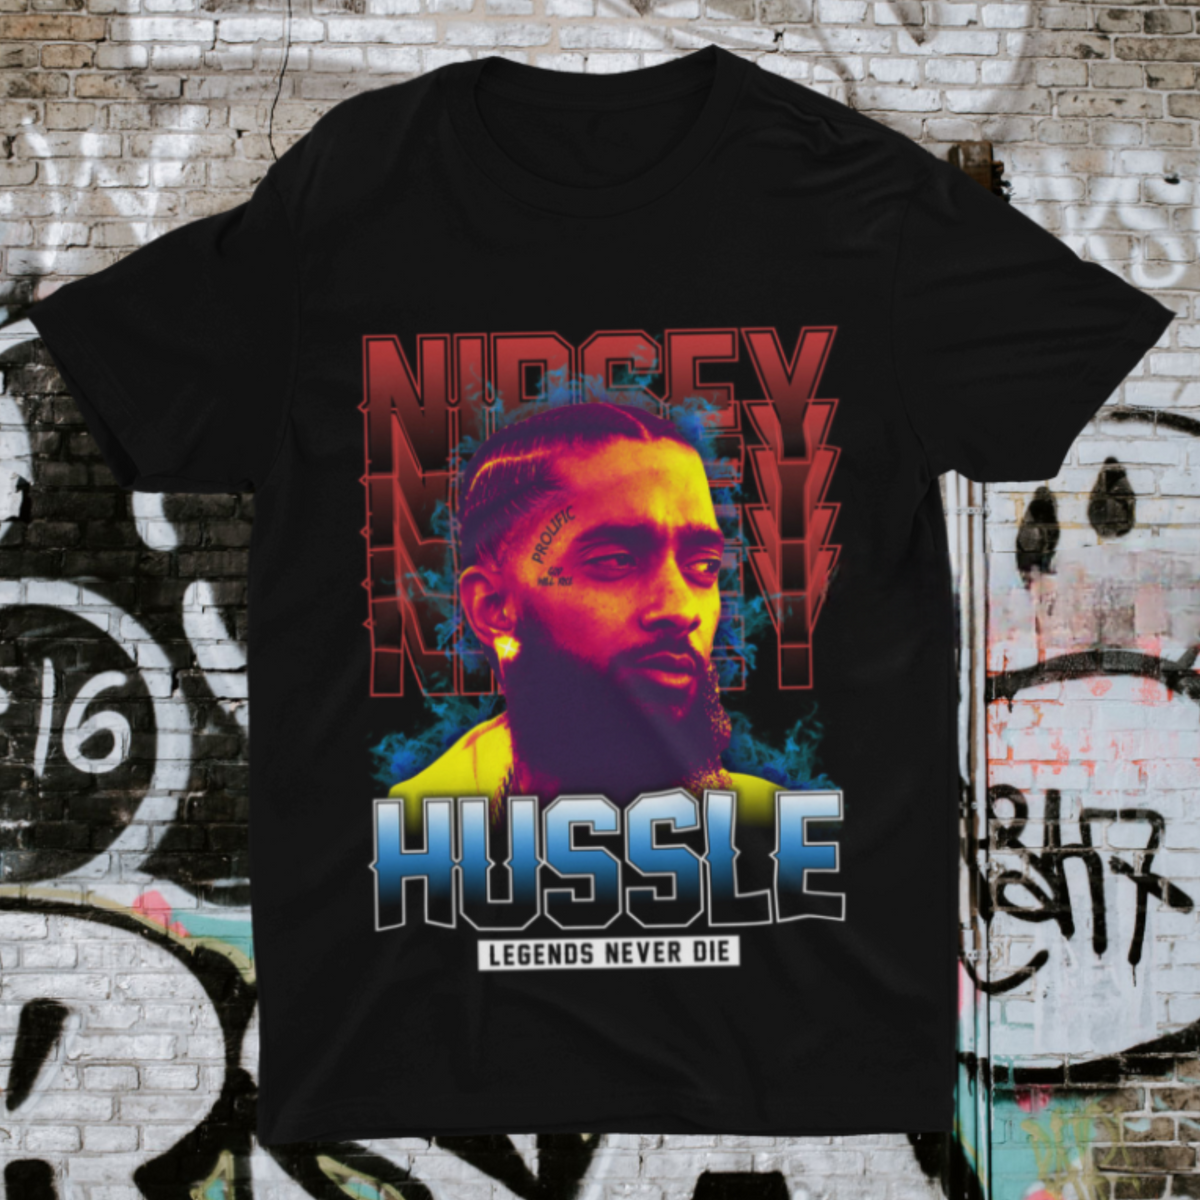 Nome do produto: Camiseta Nipsey Hussle